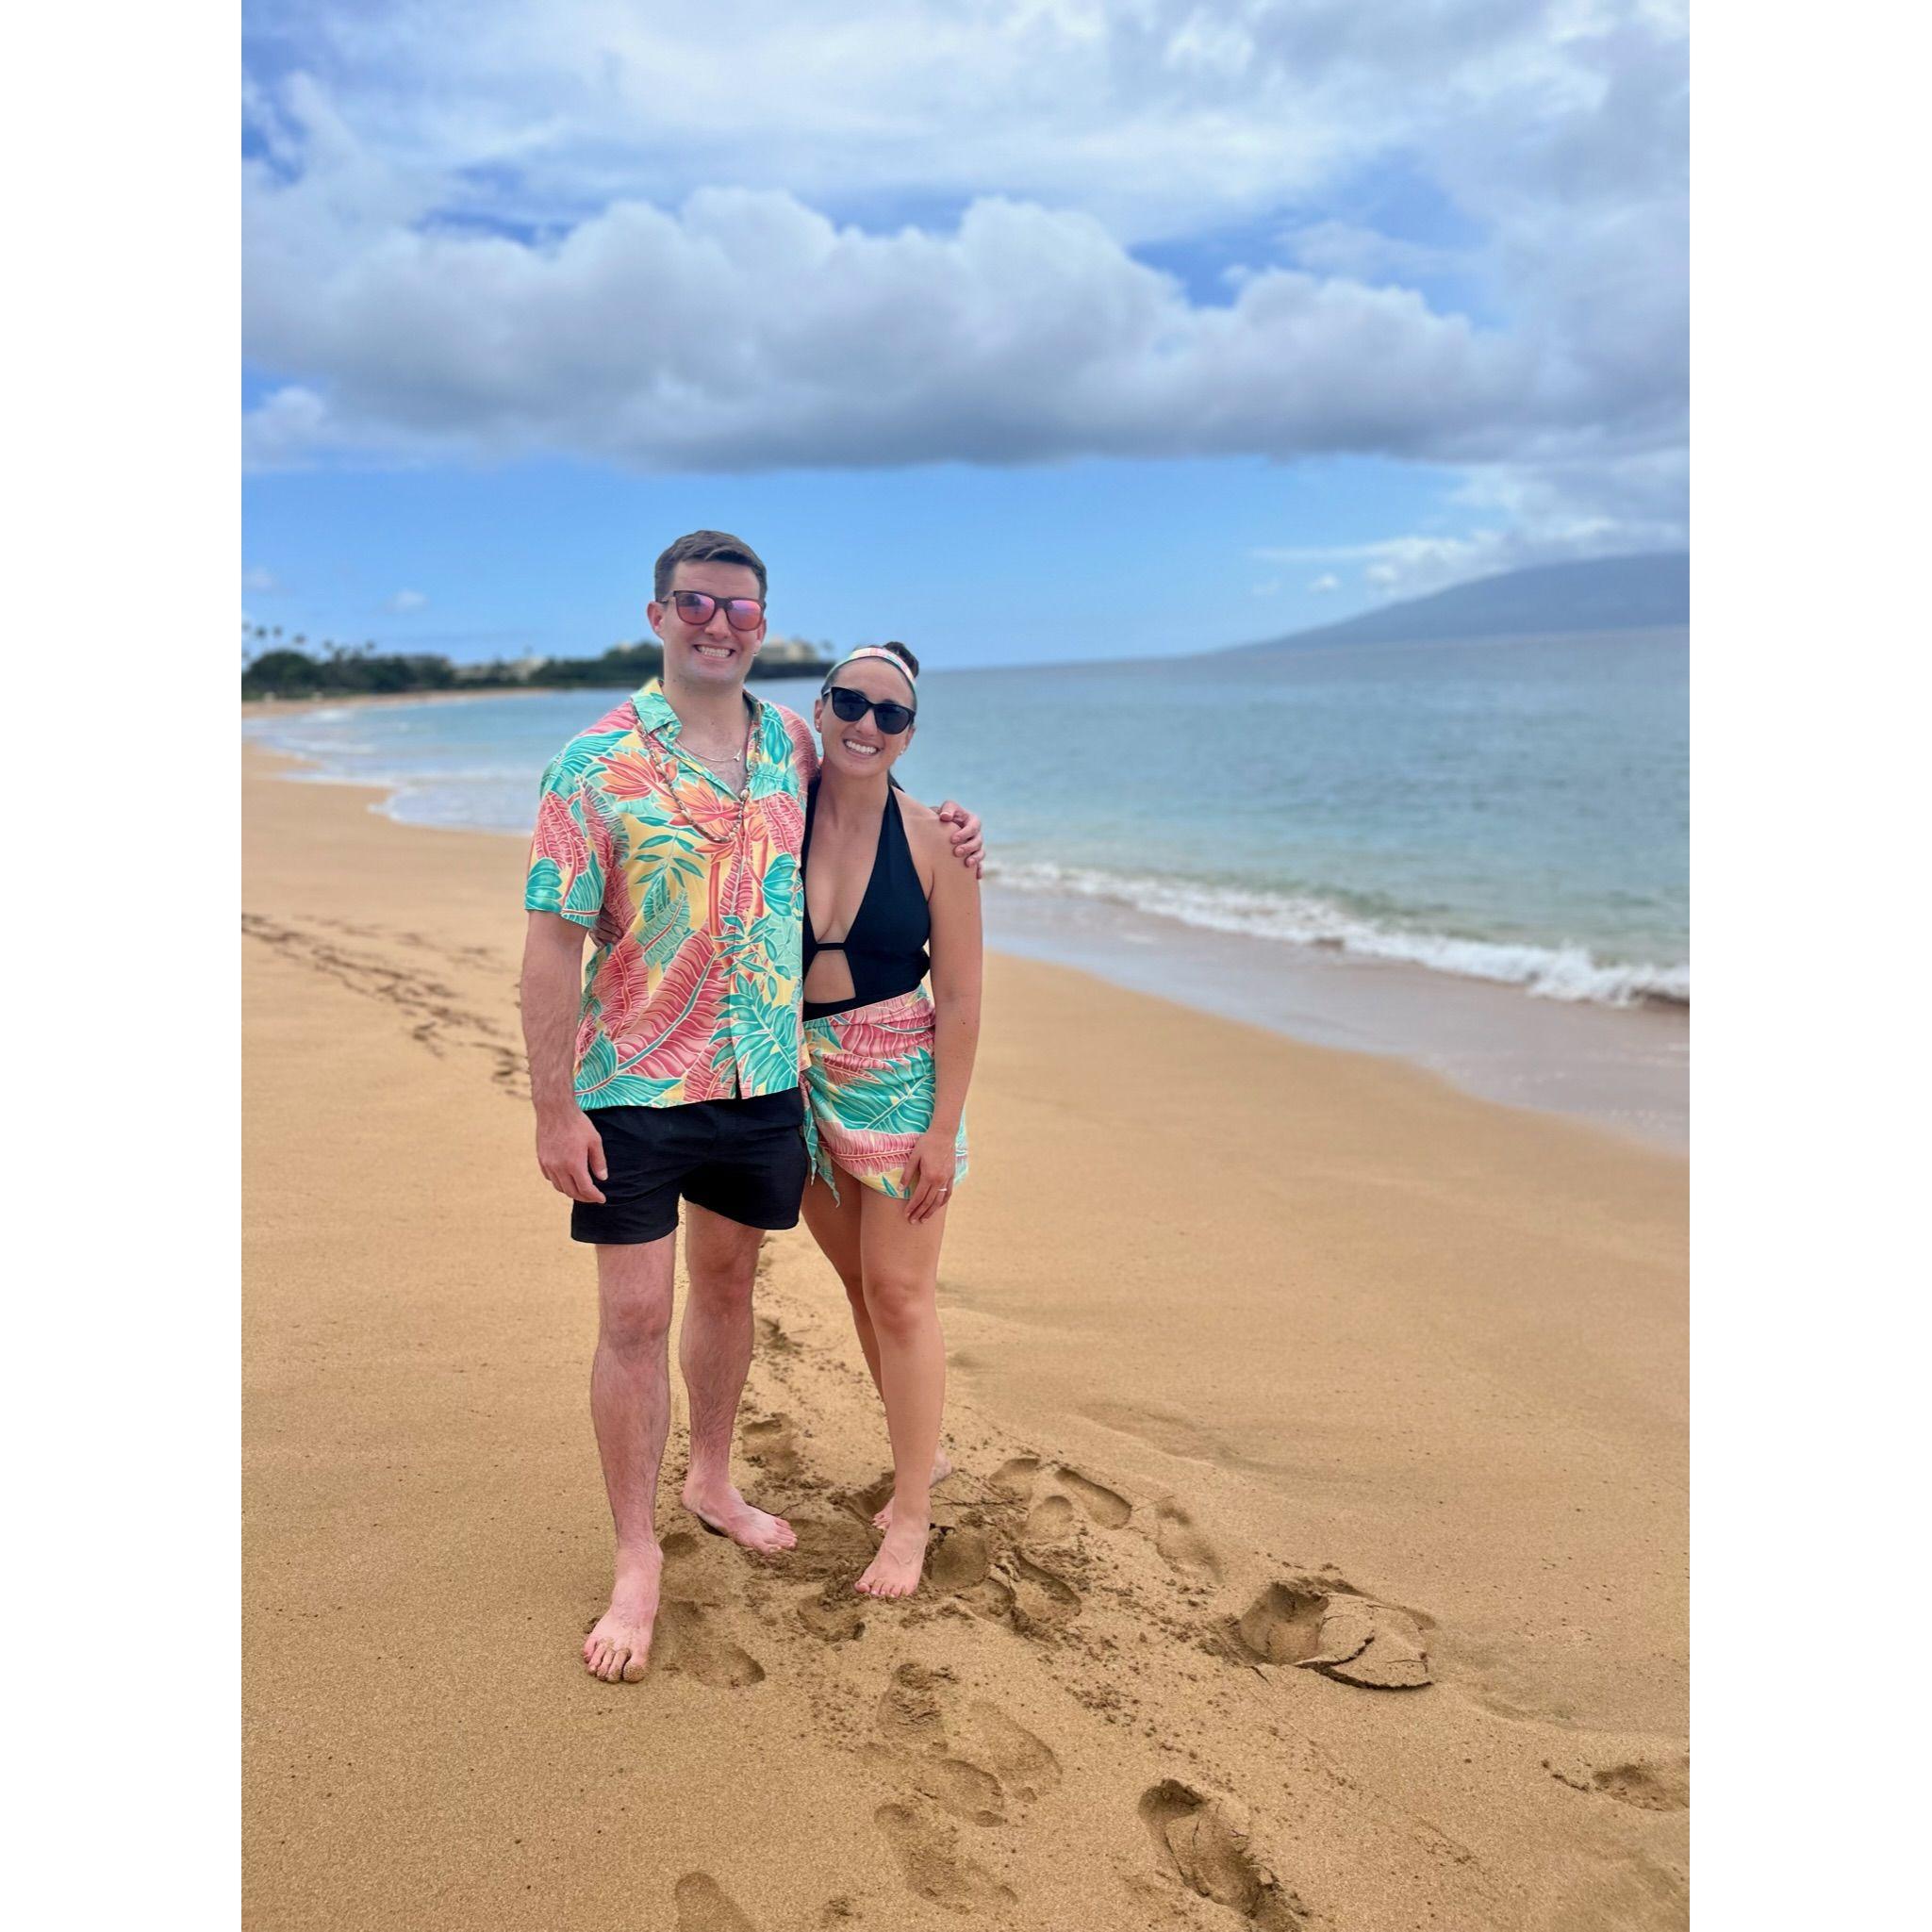 Matching outfits on Ka'anapali Beach in Maui.